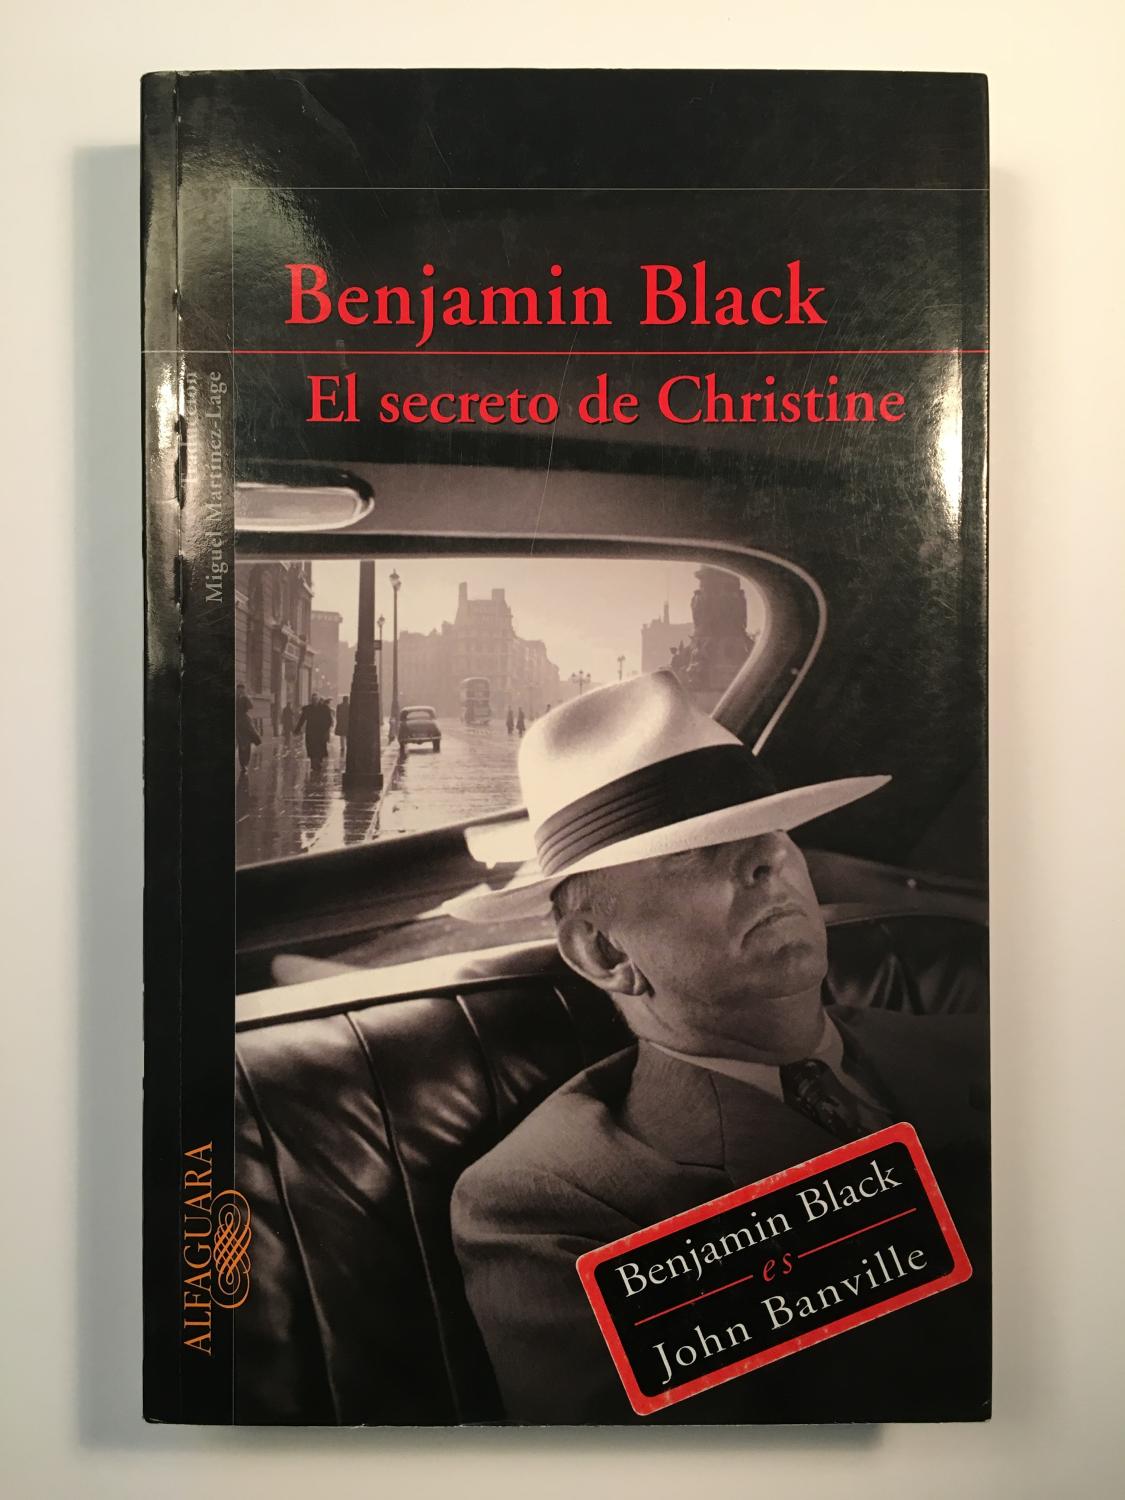 El secreto de Christine - Benjamin Black (John Banville)